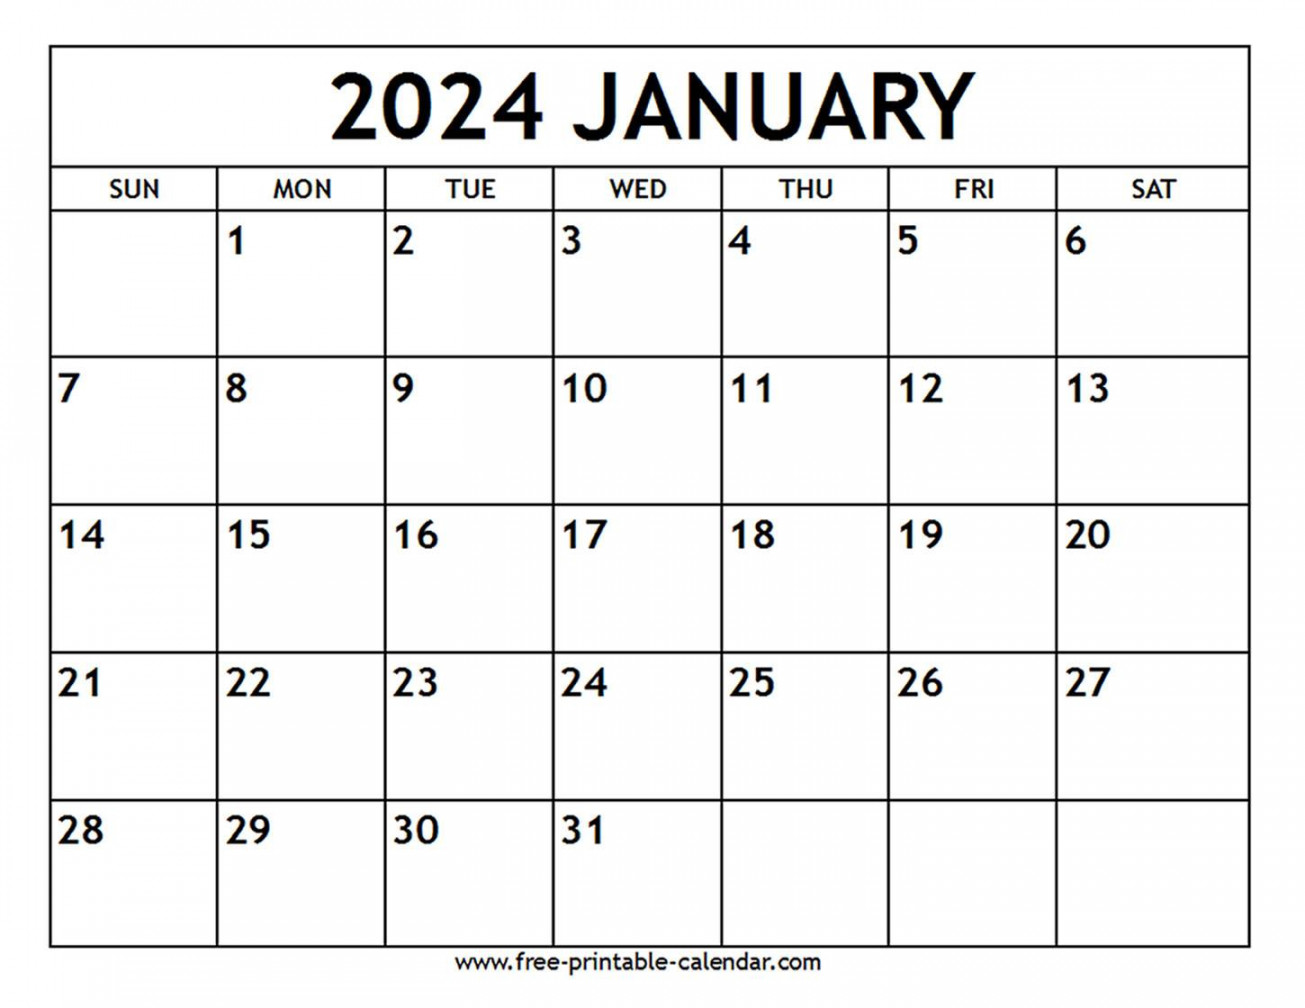 January  Calendar - Free-printable-calendar